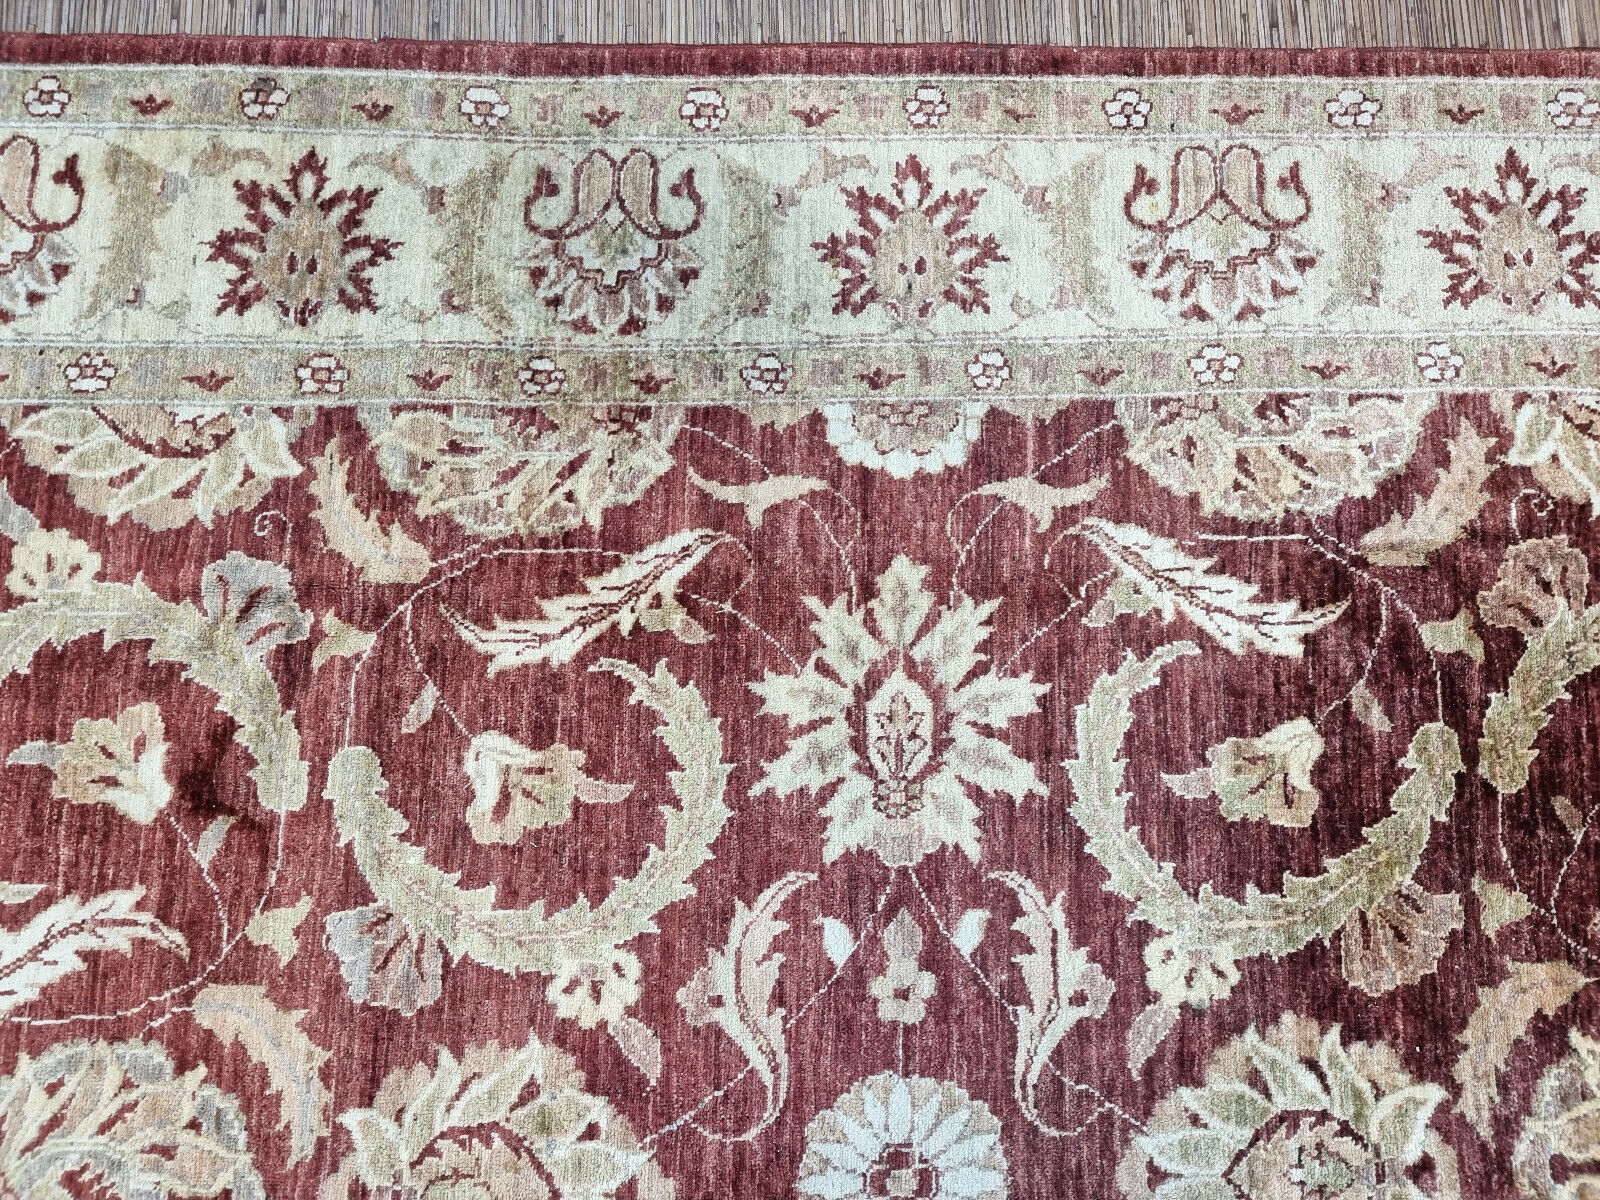 Close-up of intricate geometric designs on Handmade Vintage Afghan Zigler Rug - Detailed view emphasizing the intricate geometric designs decorating the rug.